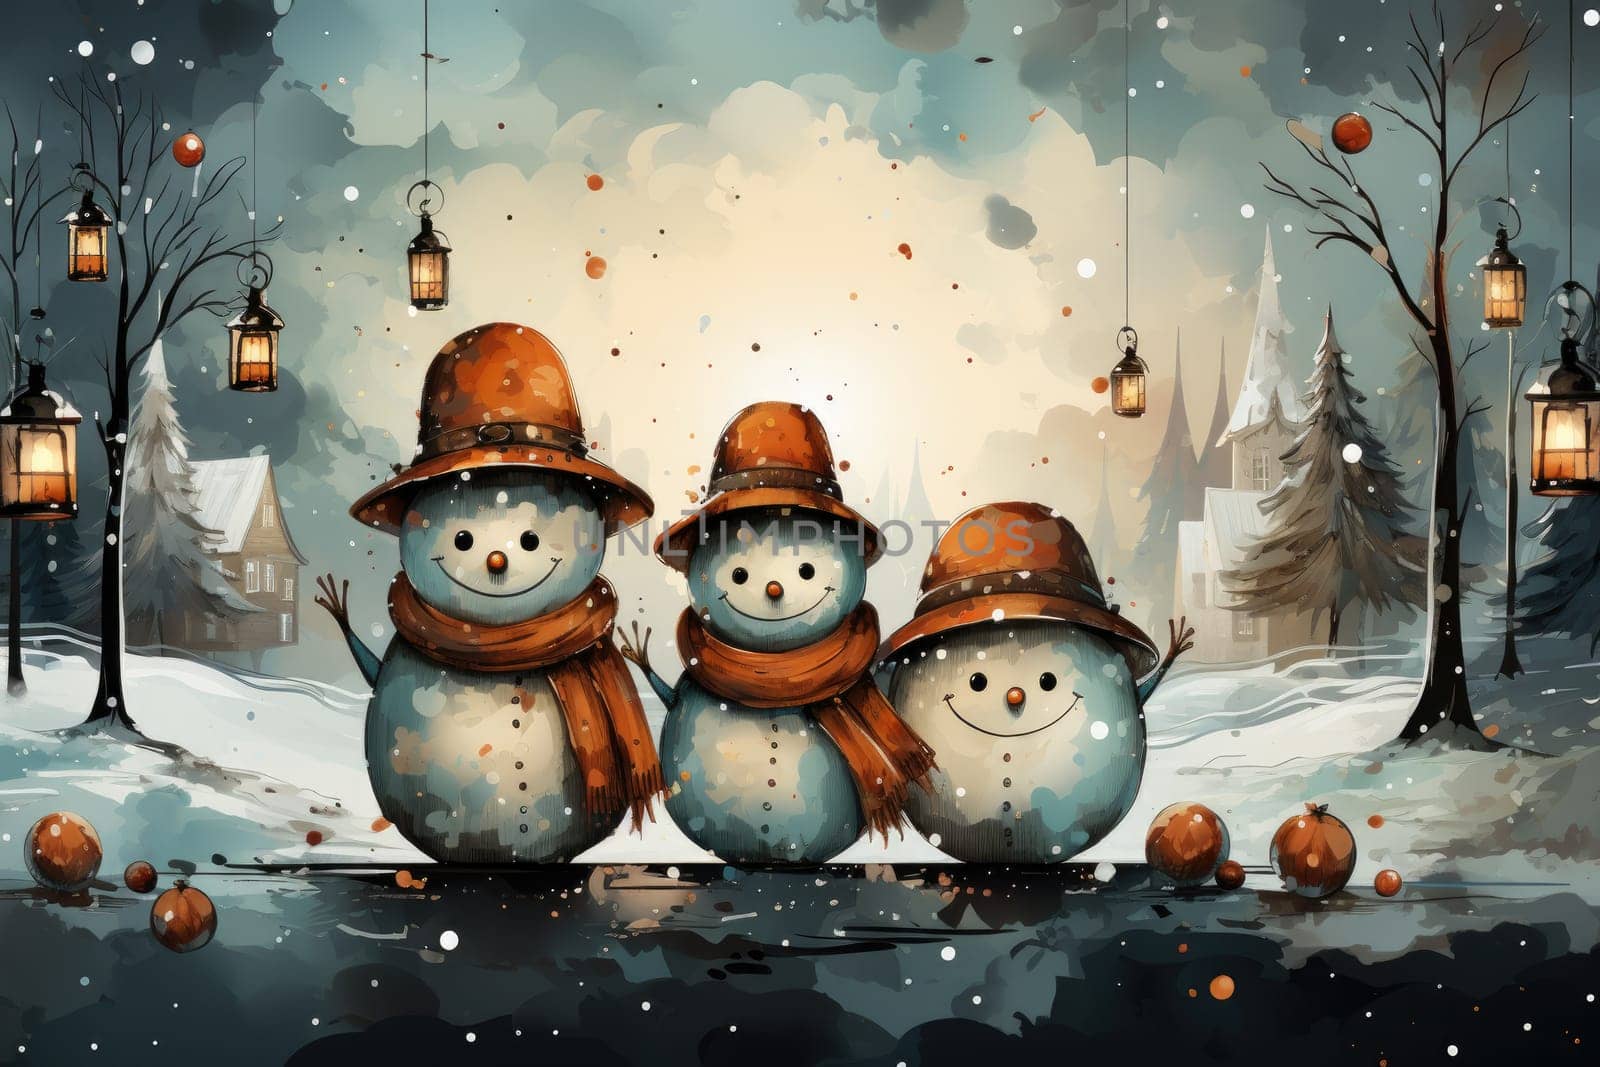 An illustration that brings holiday cheer and holiday fun.